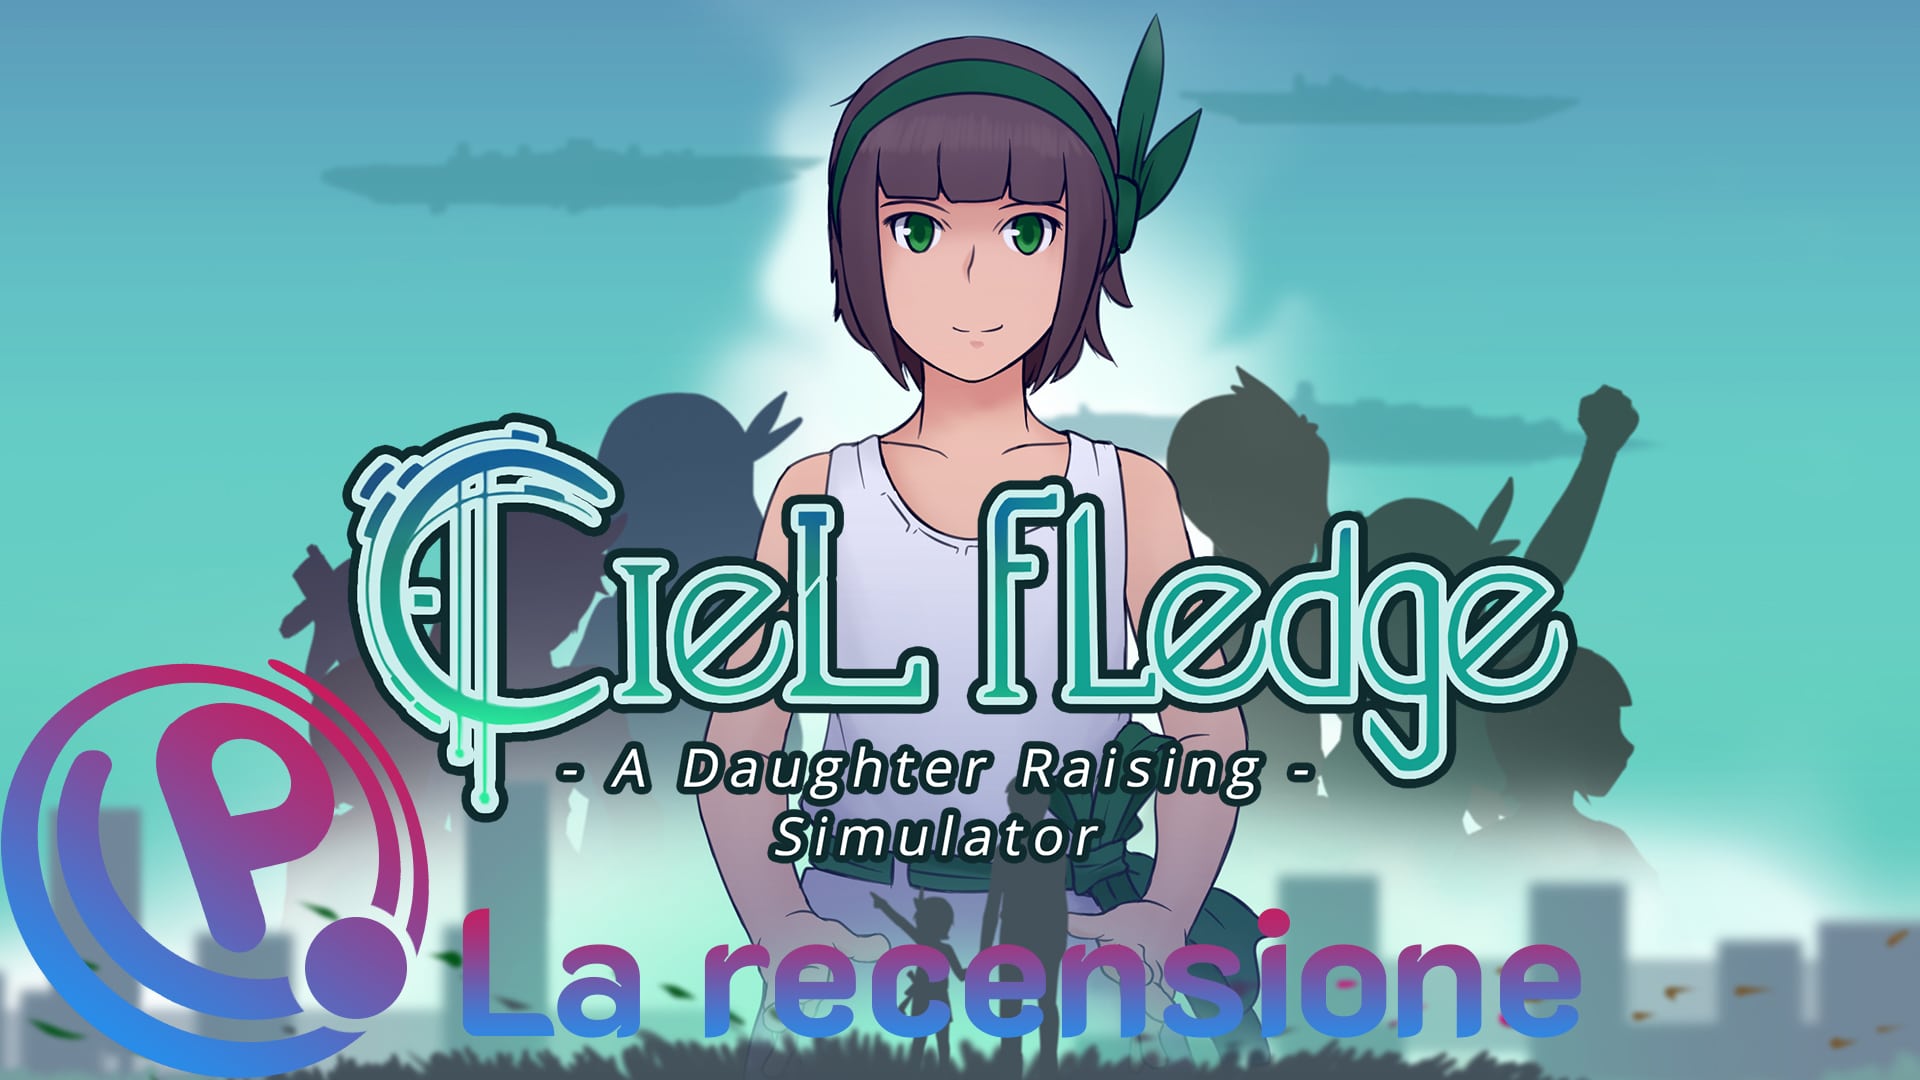 Ciel Fledge: A Daughter Raising Simulator la recensione 4